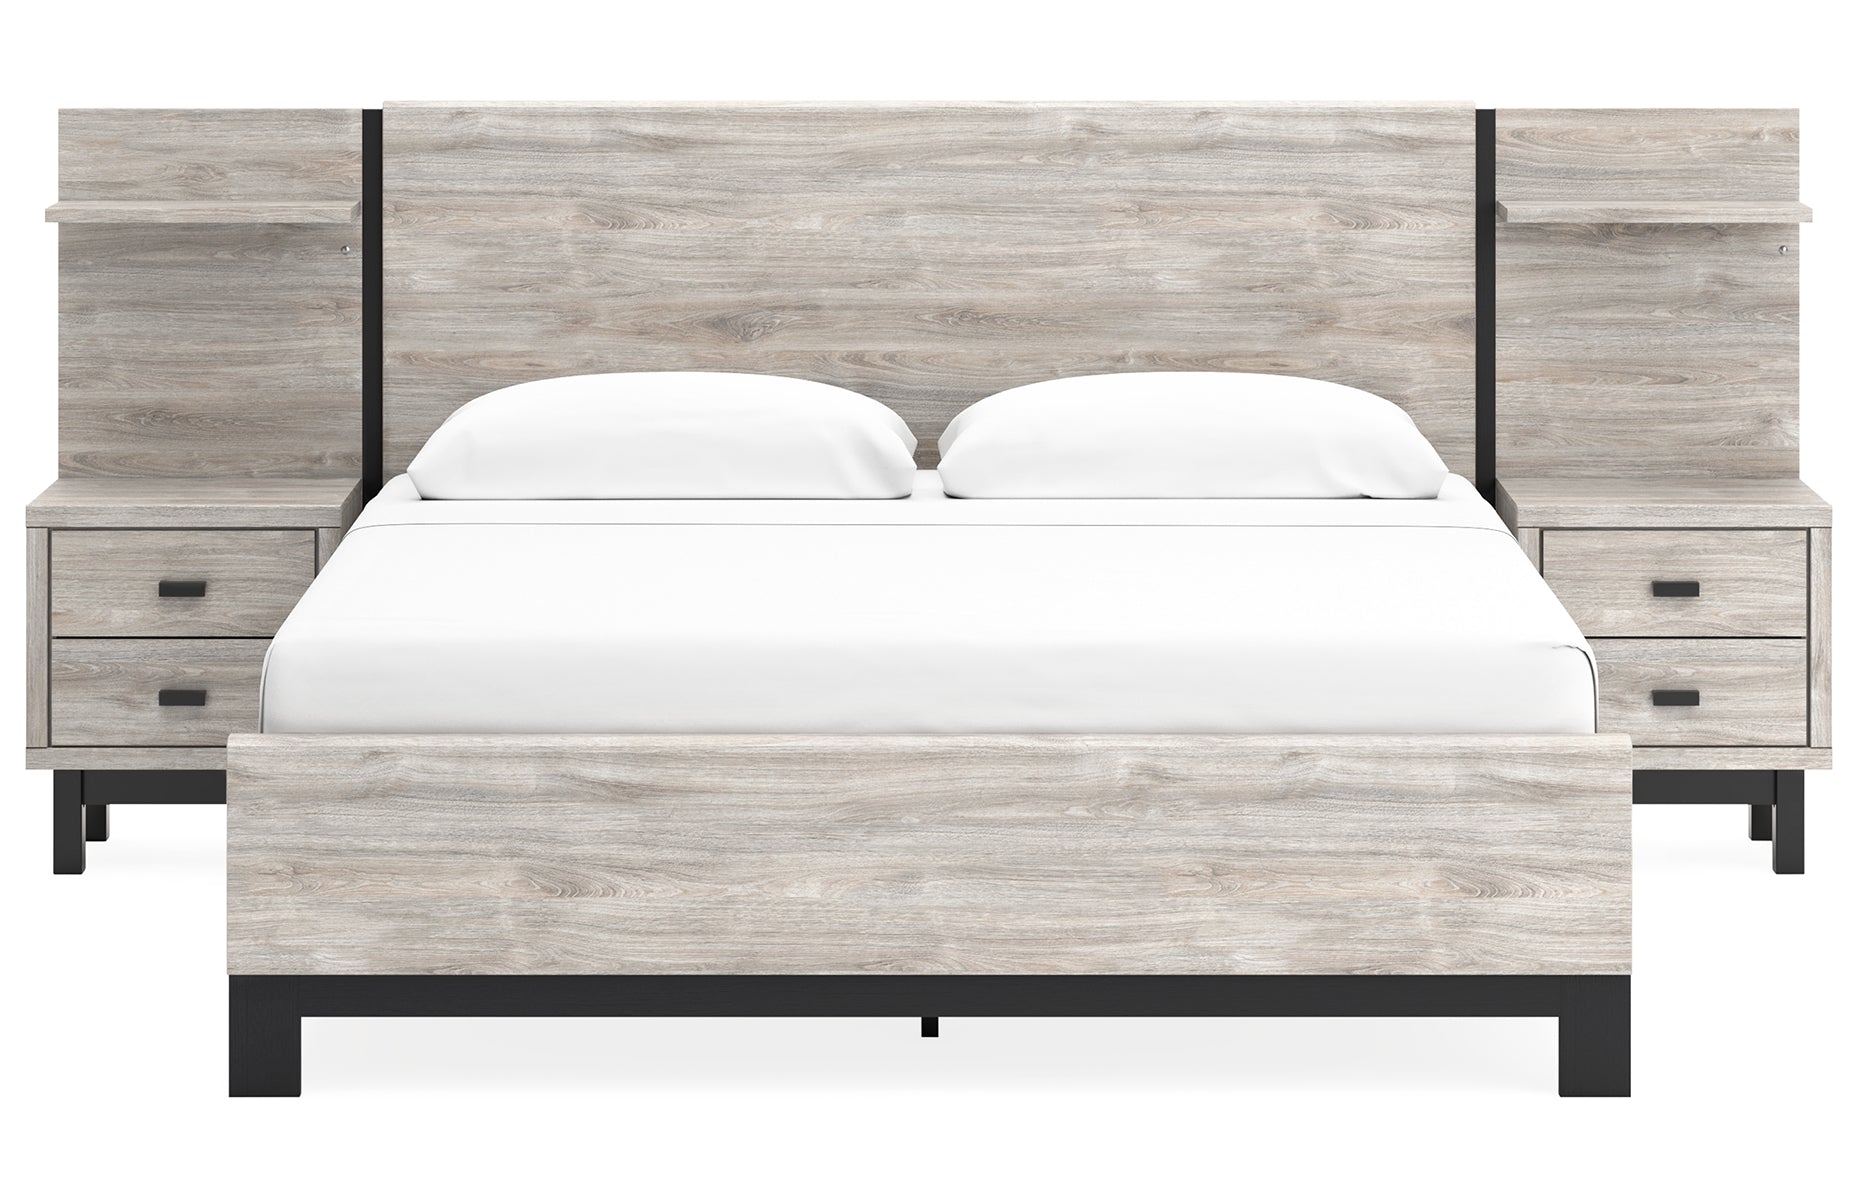 Vessalli King Panel Bed with Dresser